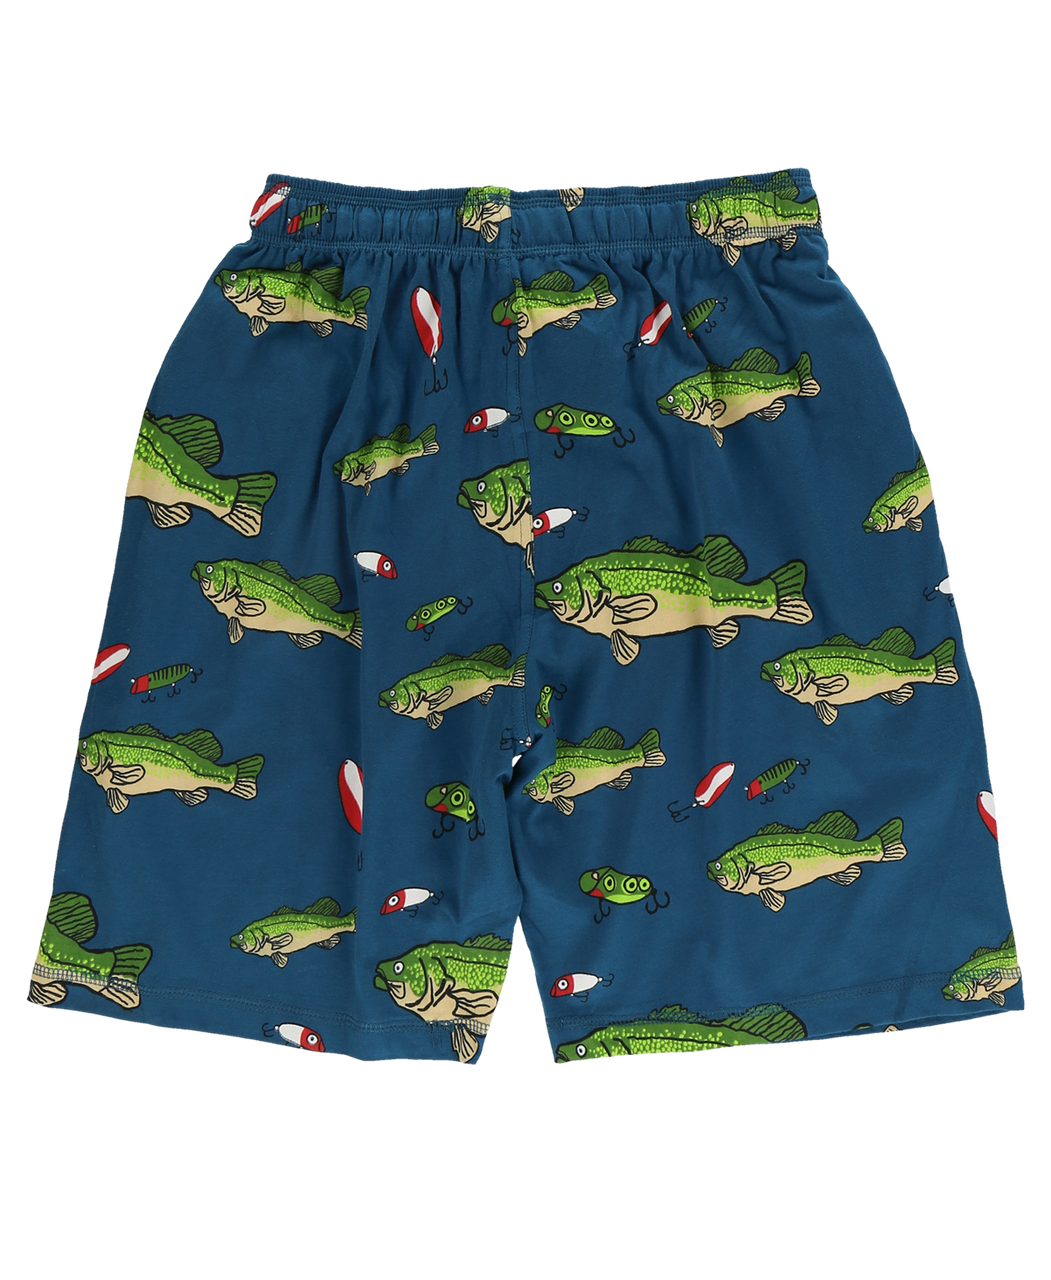 Bass | Men's Pajama Shorts | LazyOne